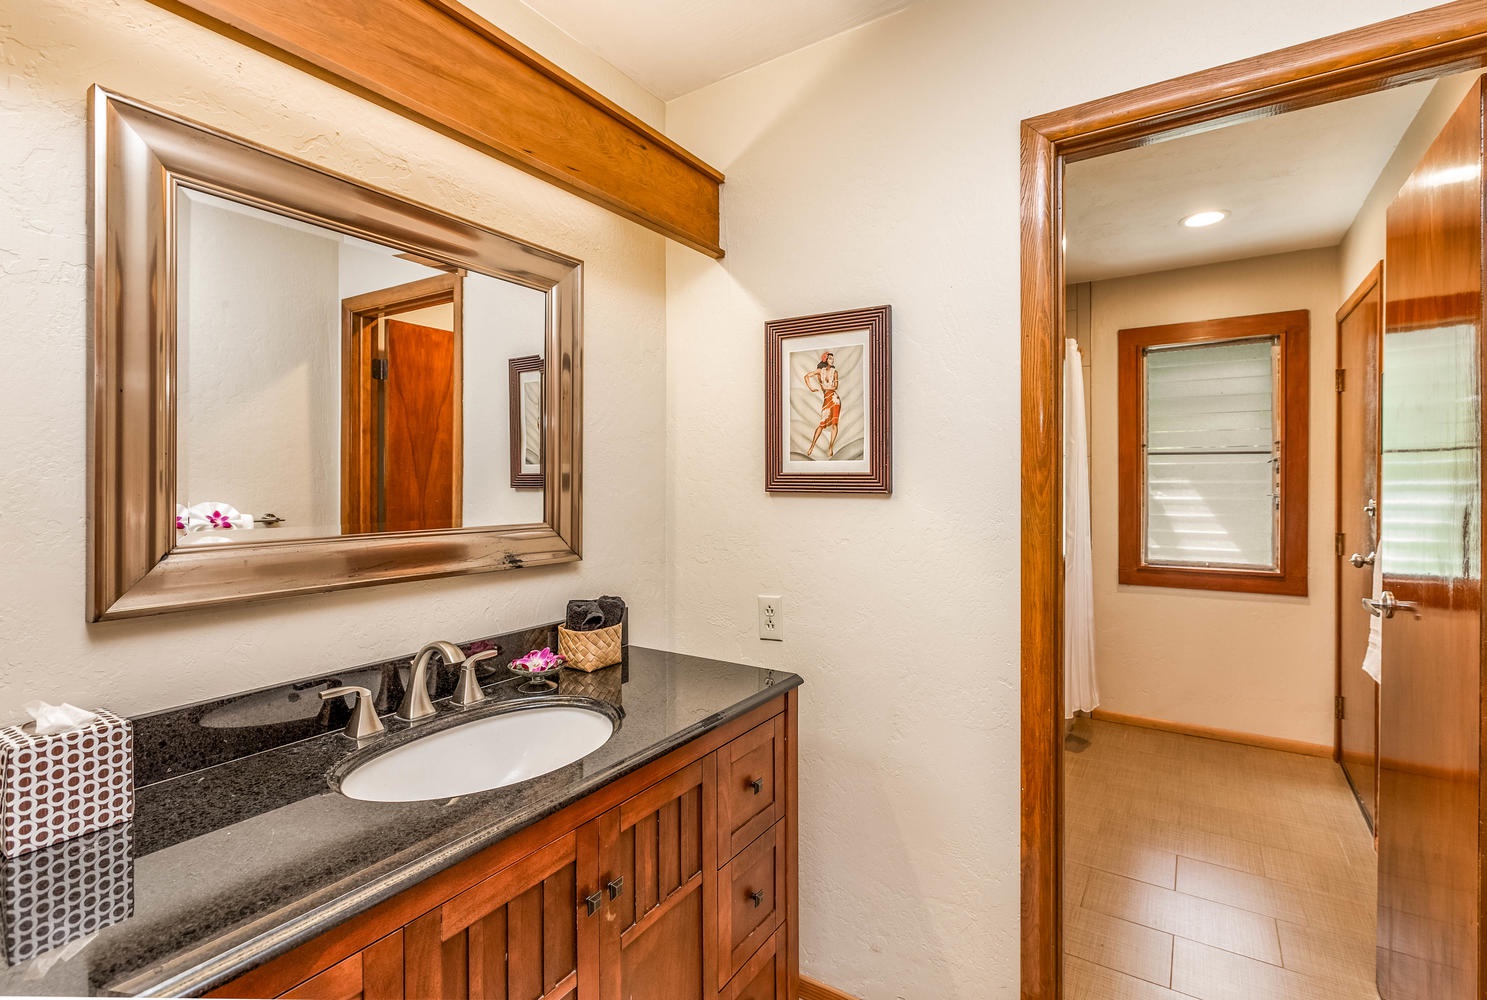 Princeville Vacation Rentals, Hale Anu Keanu - Downstairs bath